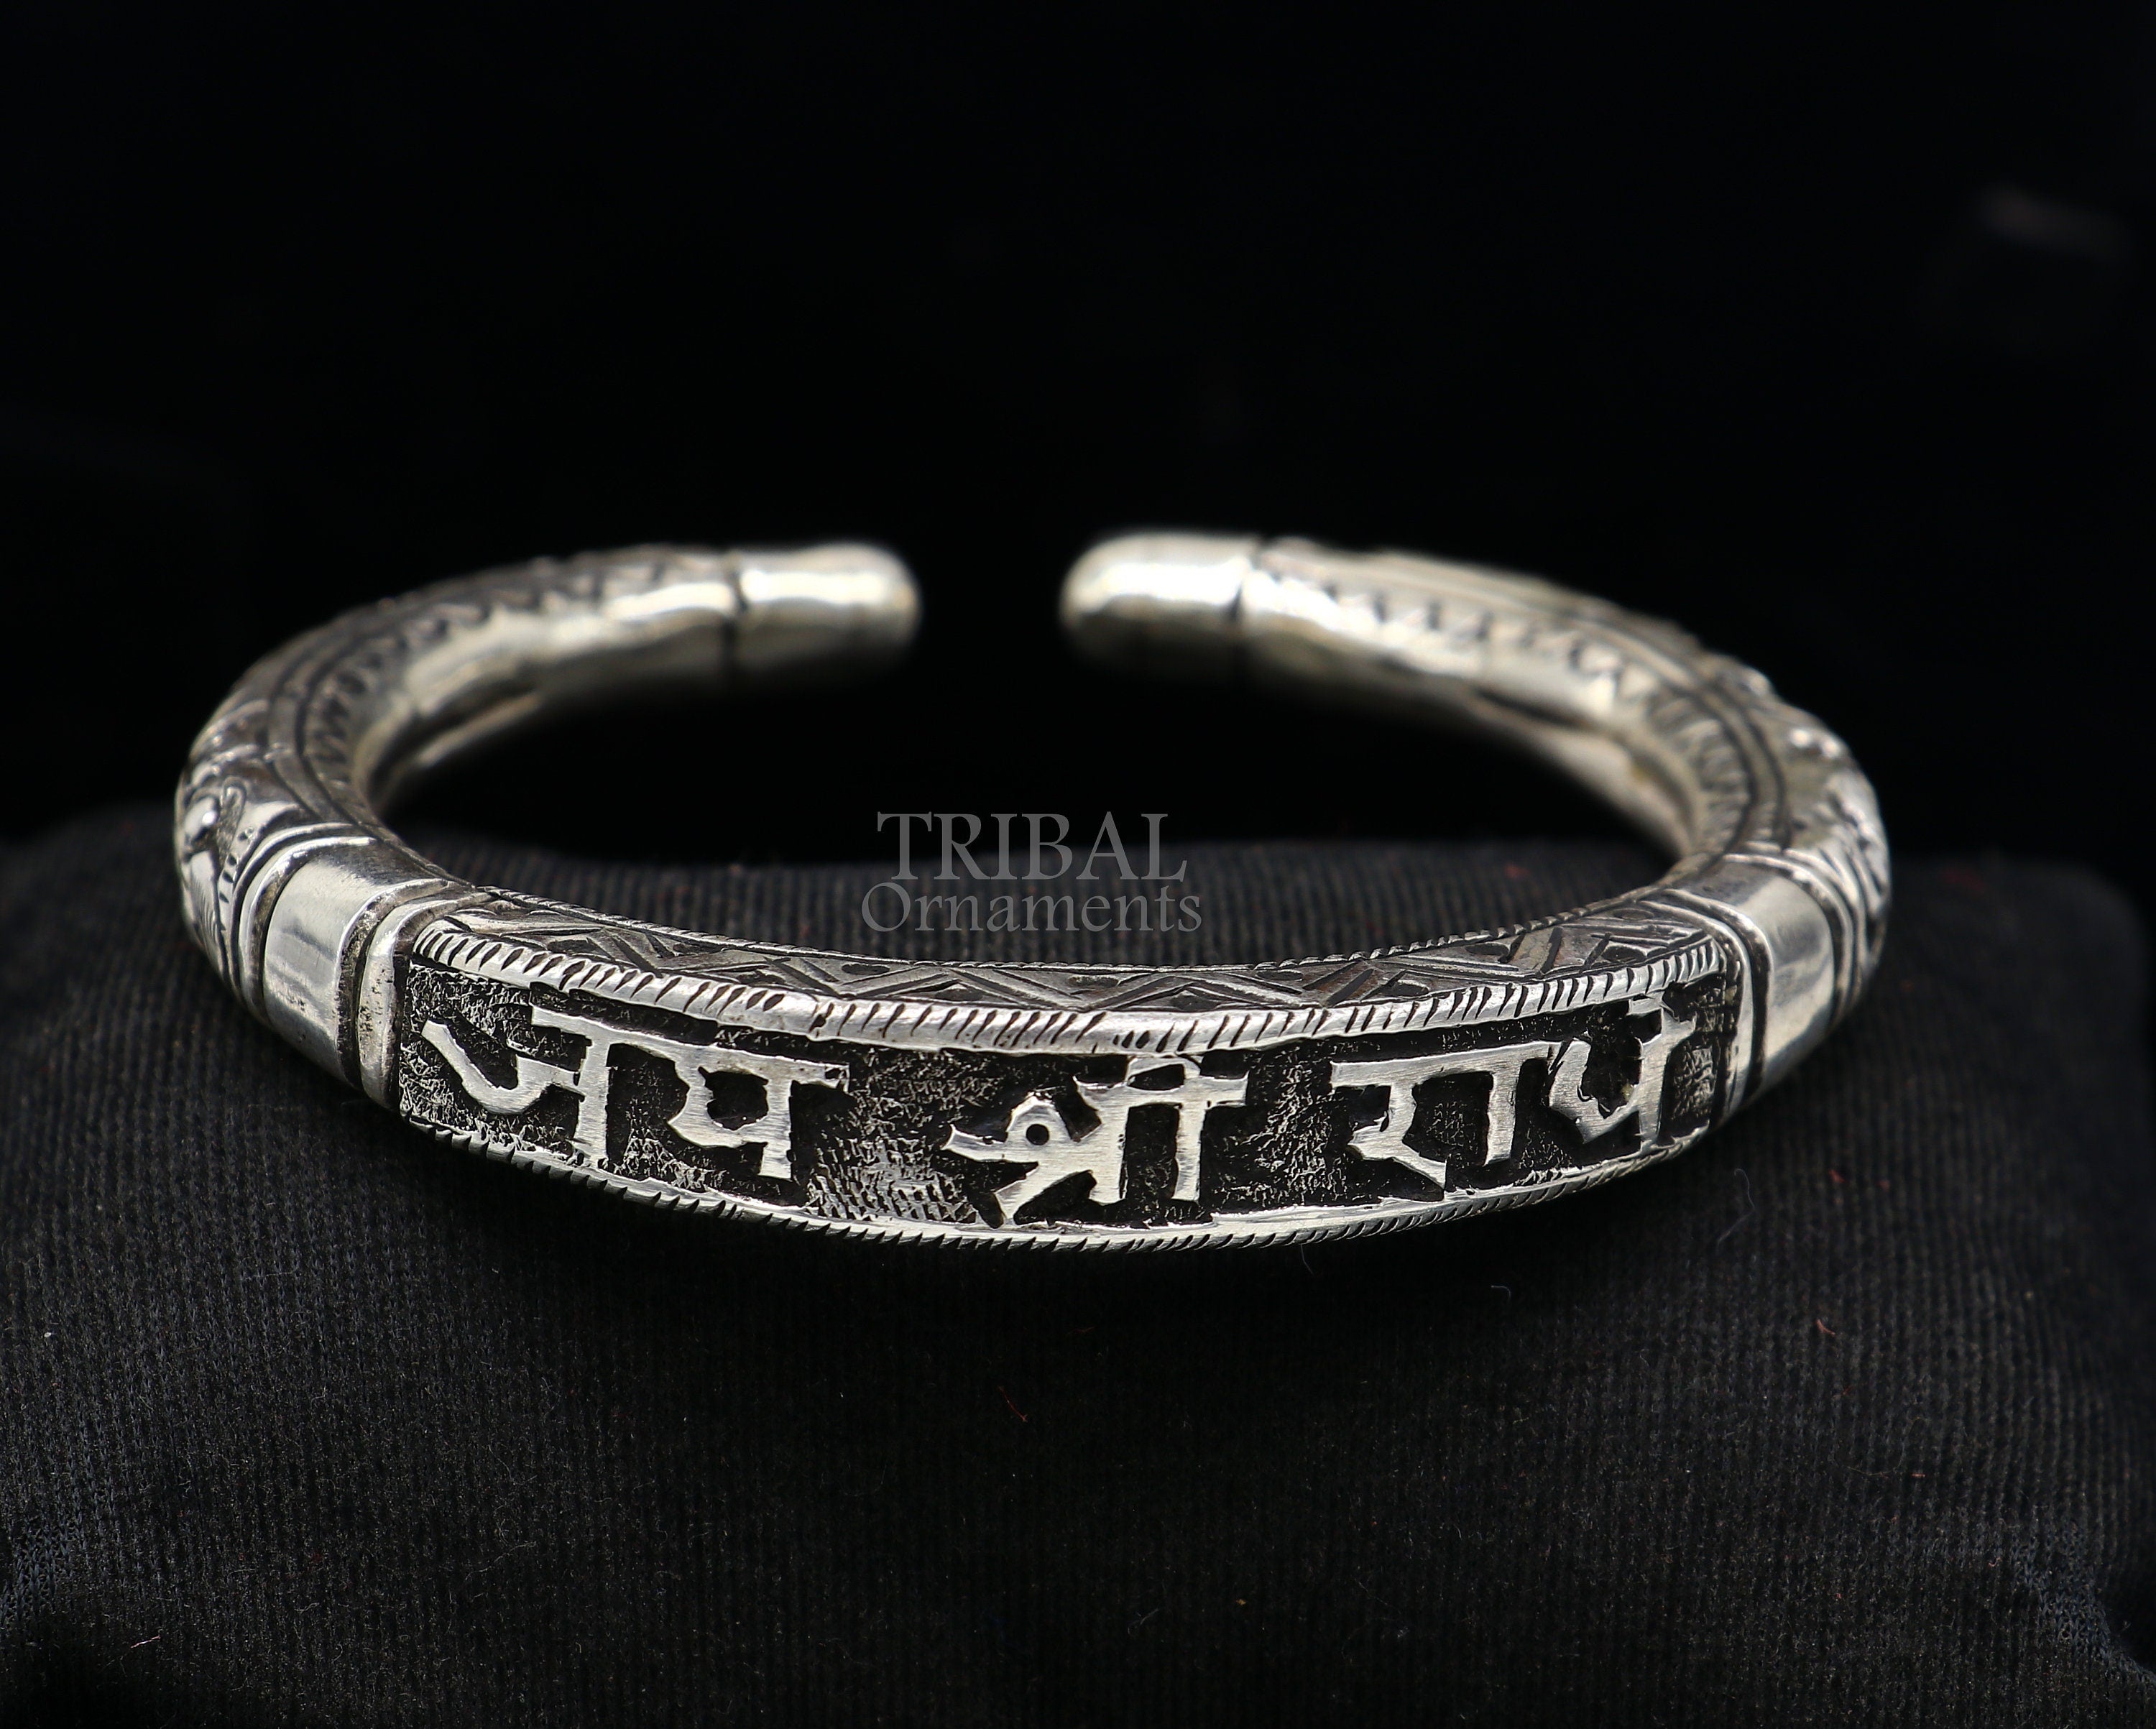 Buy Sullery Chhatrapati Shivaji Maharaj Blue Rubber Bracelet Online at Low  Prices in India - Paytmmall.com